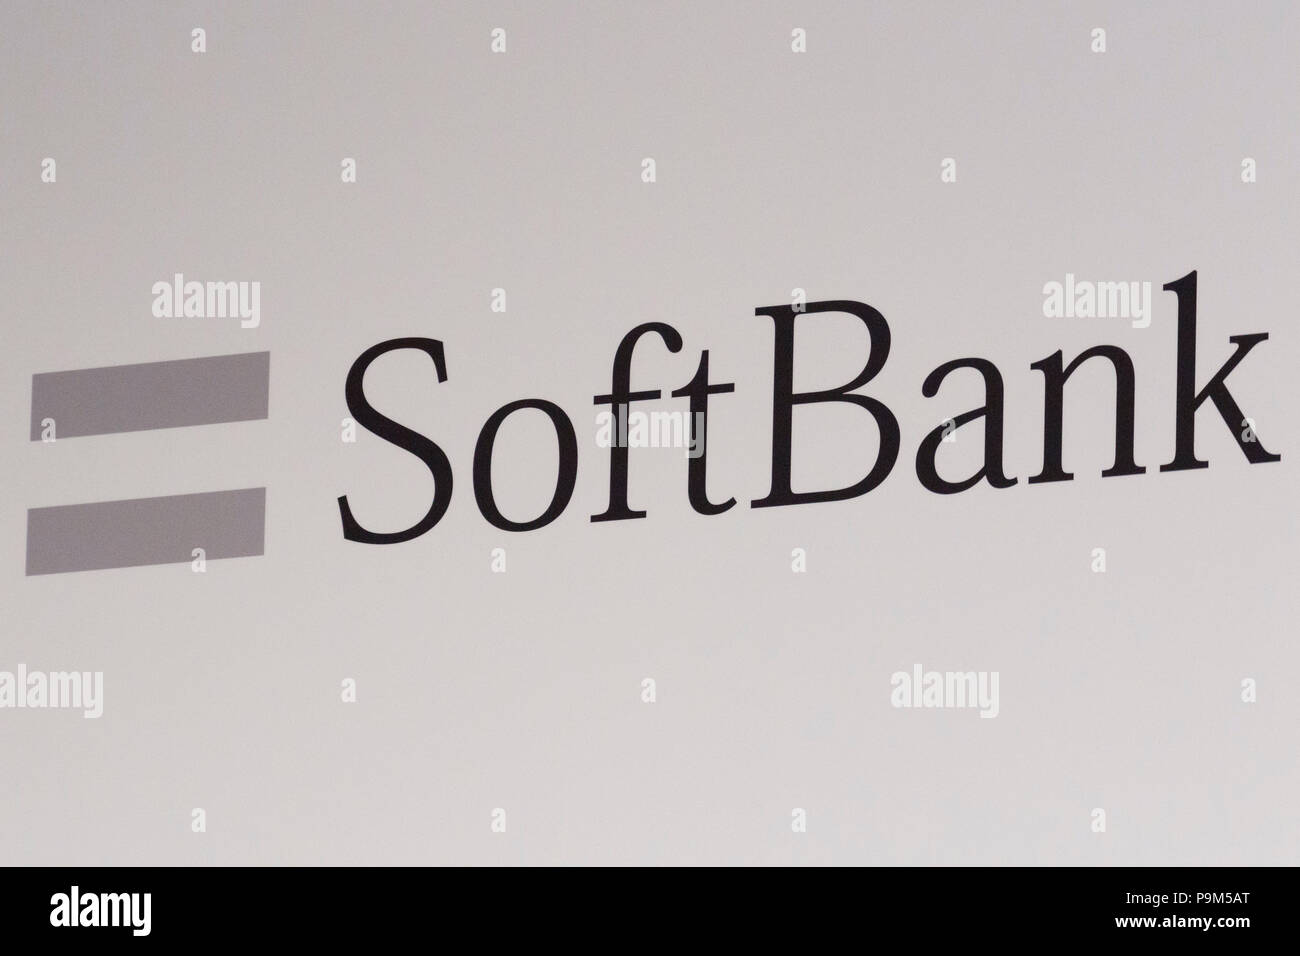 Softbank Logo High Resolution Stock Photography And Images Alamy